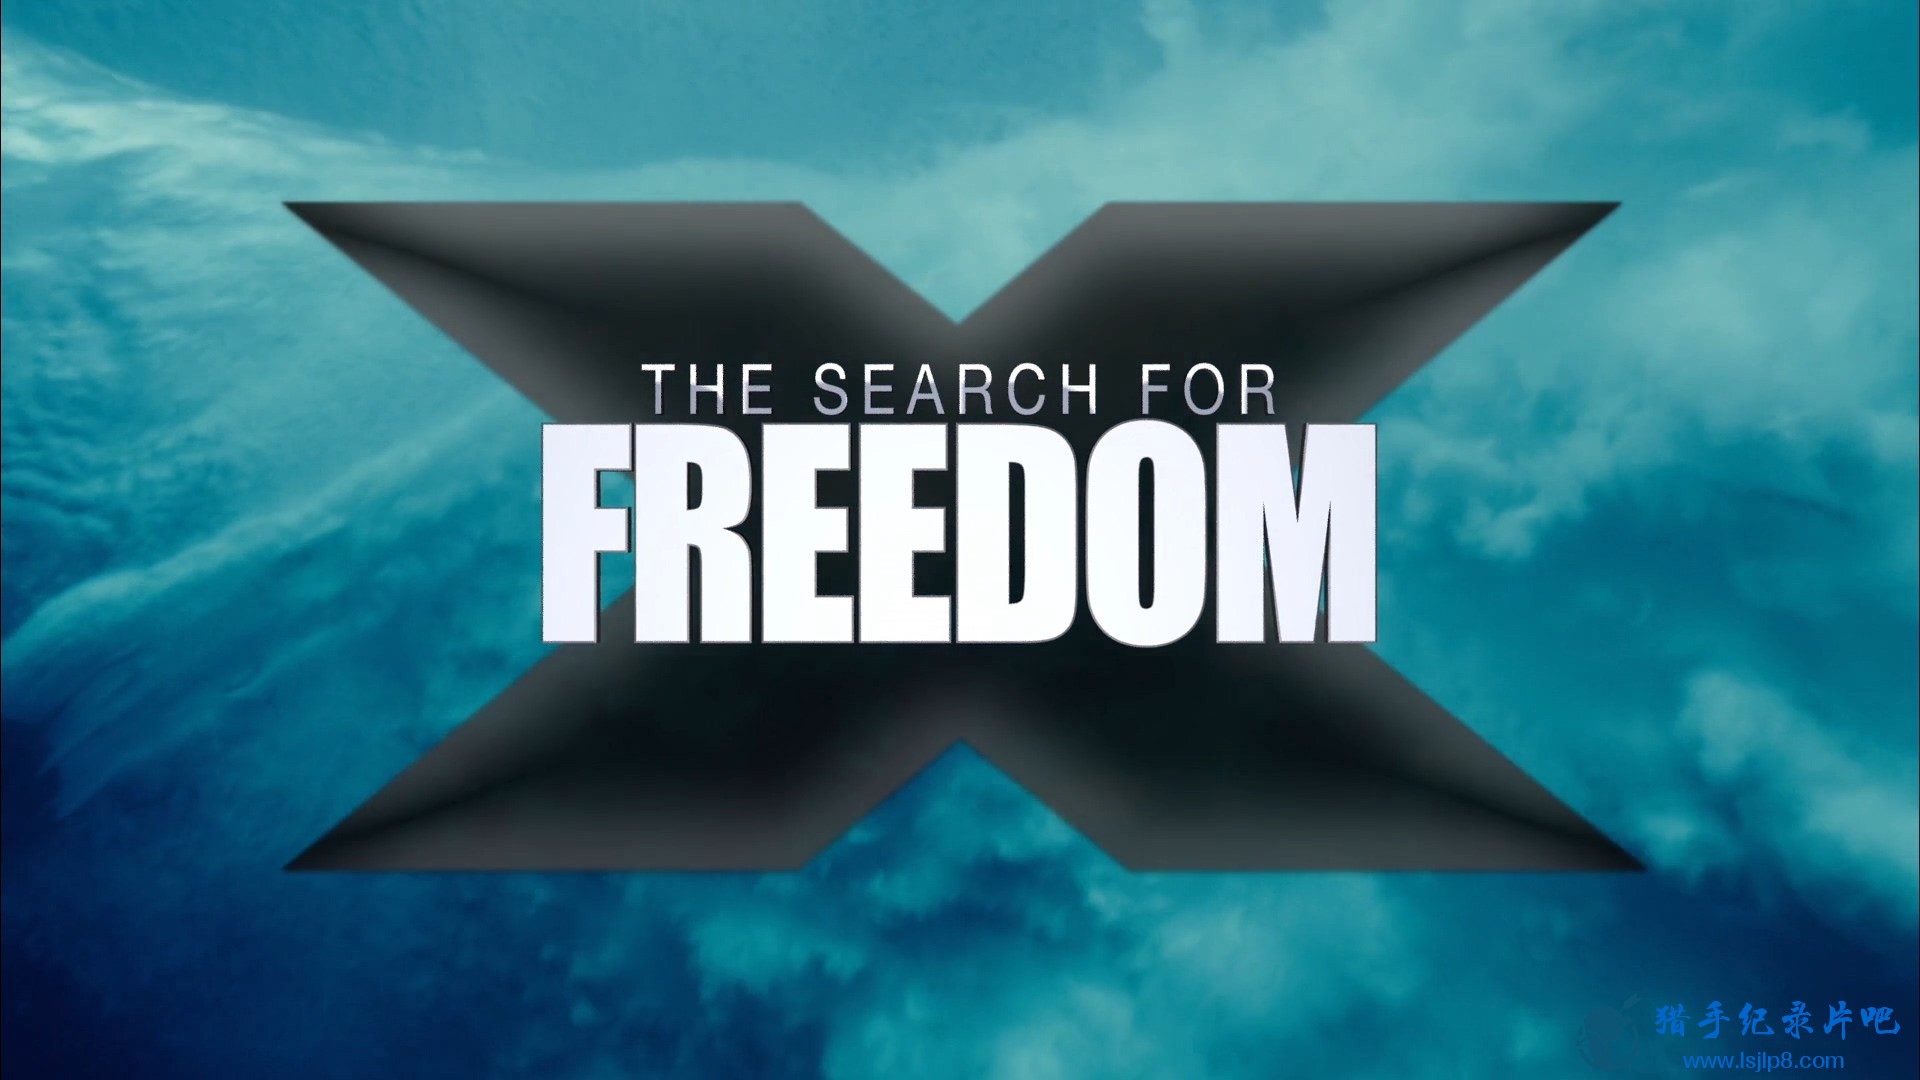 The.Search.for.Freedom.2015.DOCU.1080p.BluRay.x264.DTS-RARBG.mkv_20220105_111531.526.jpg